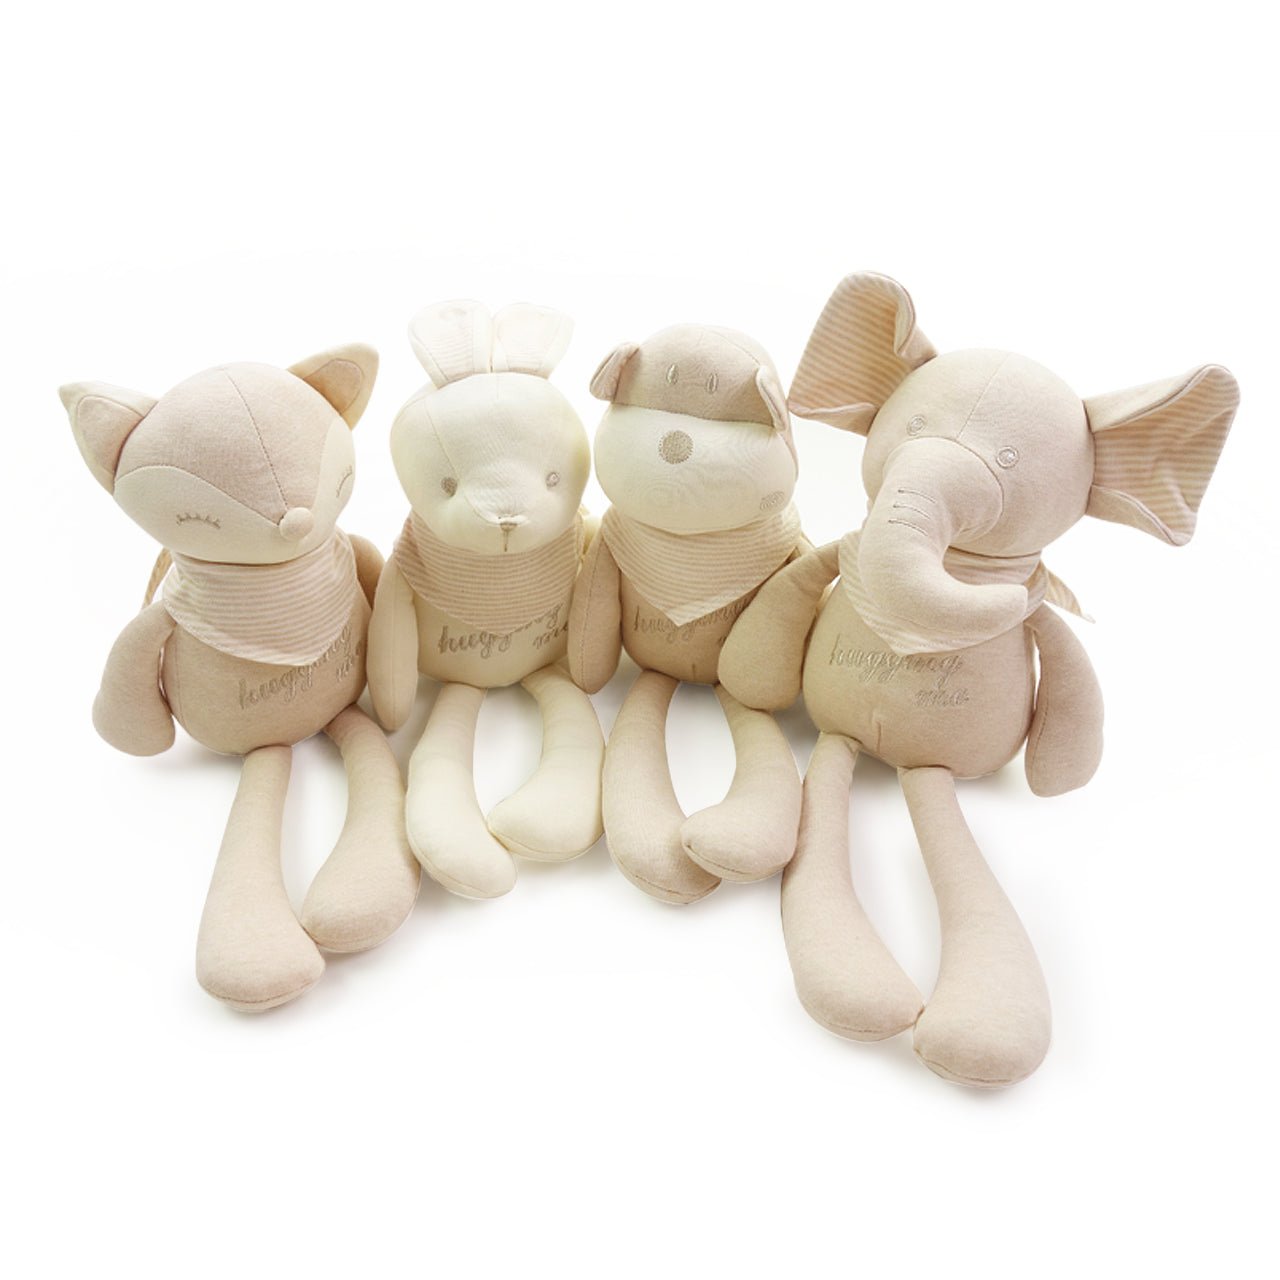 Canadian Stuffed Animal Plush toys